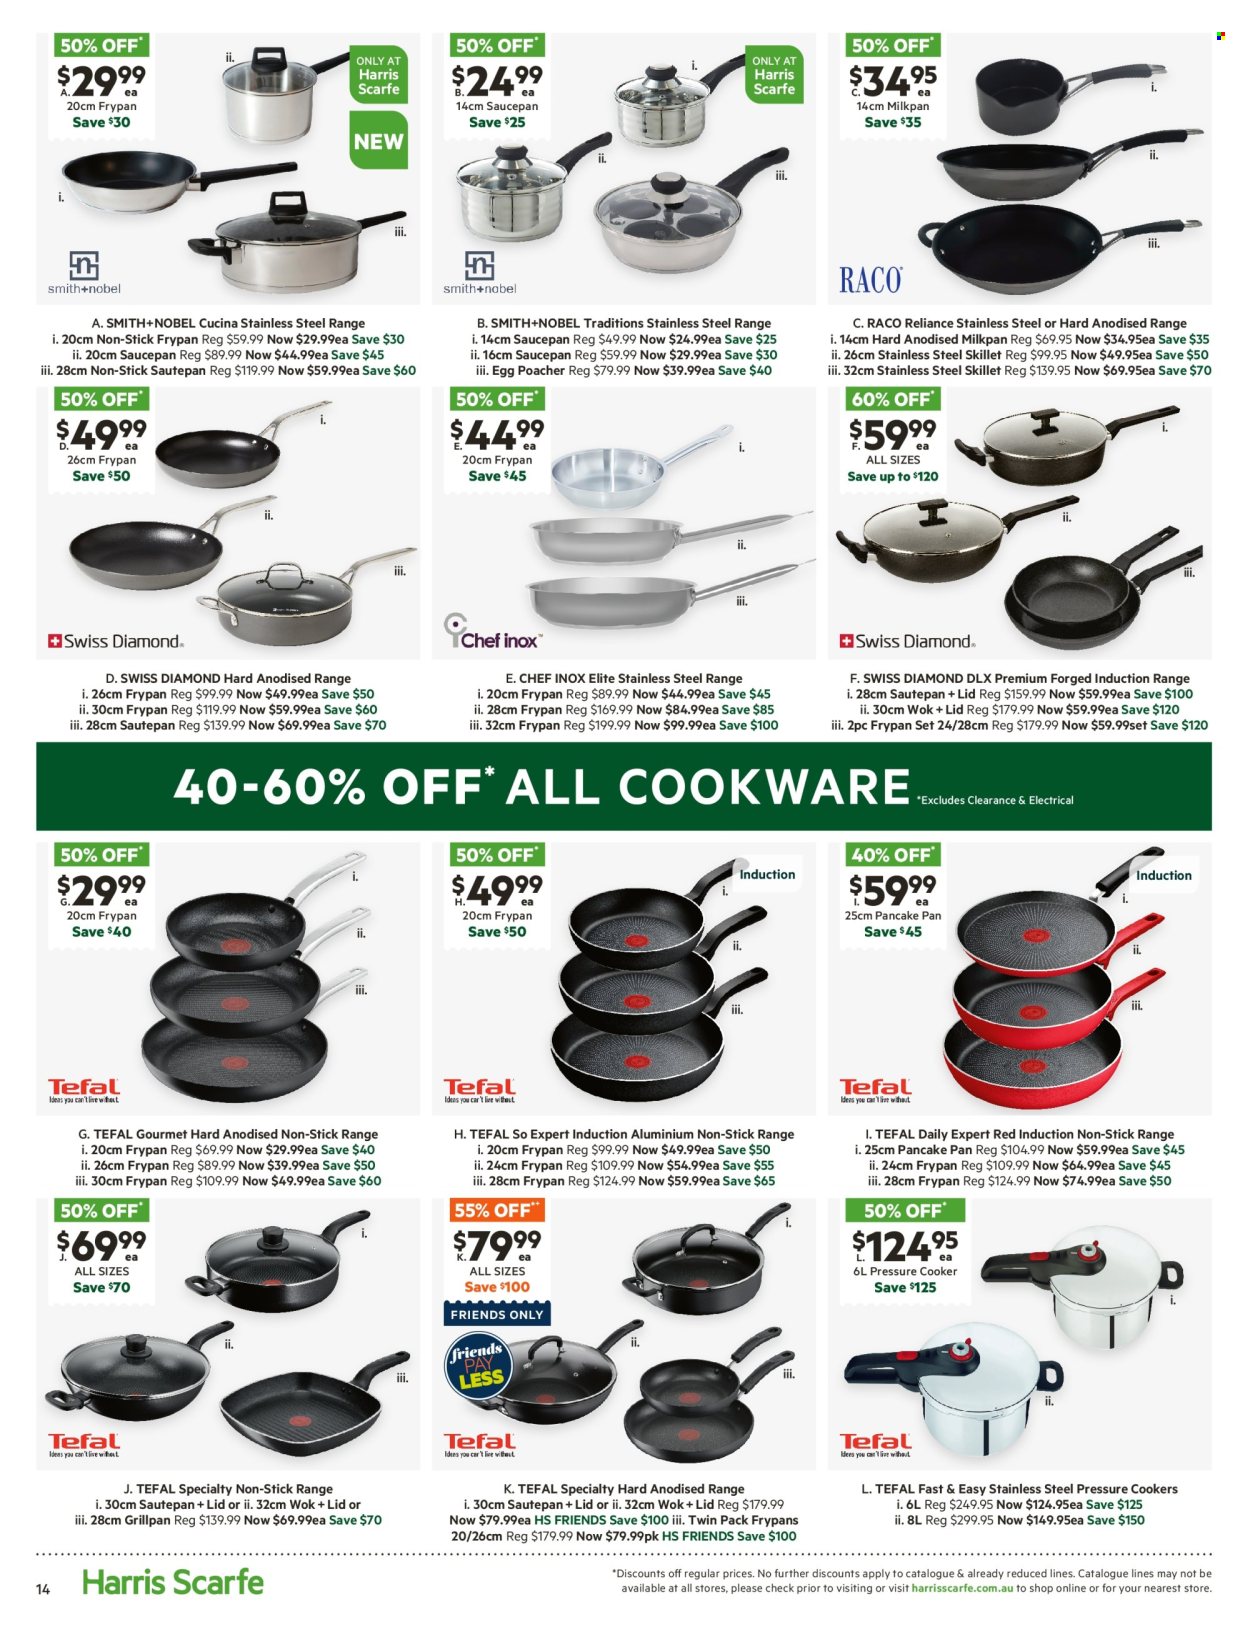 thumbnail - Harris Scarfe Catalogue - Sales products - Tefal, cookware set, lid, pressure cooker, pan, wok, saucepan, frying pan, Smith+Nobel, eggs. Page 14.